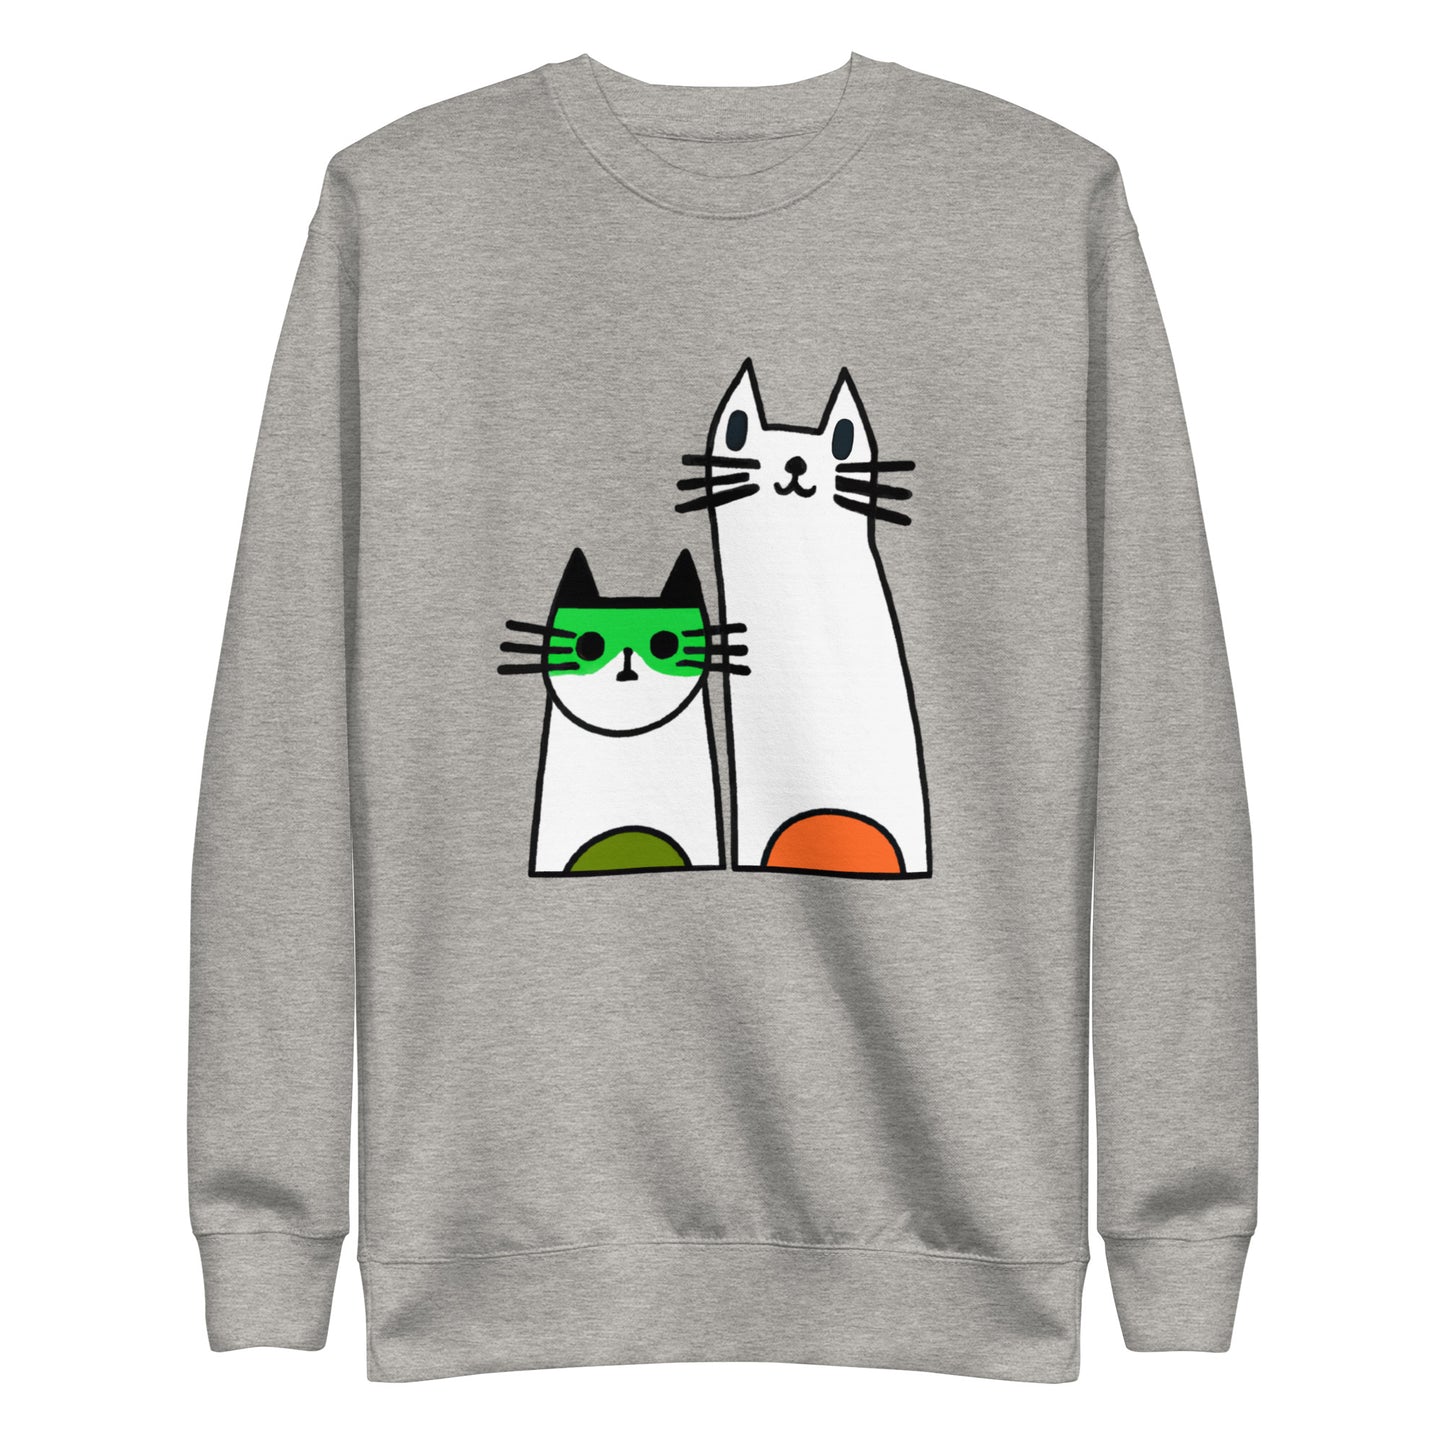 Cute Cats Premium Sweatshirt